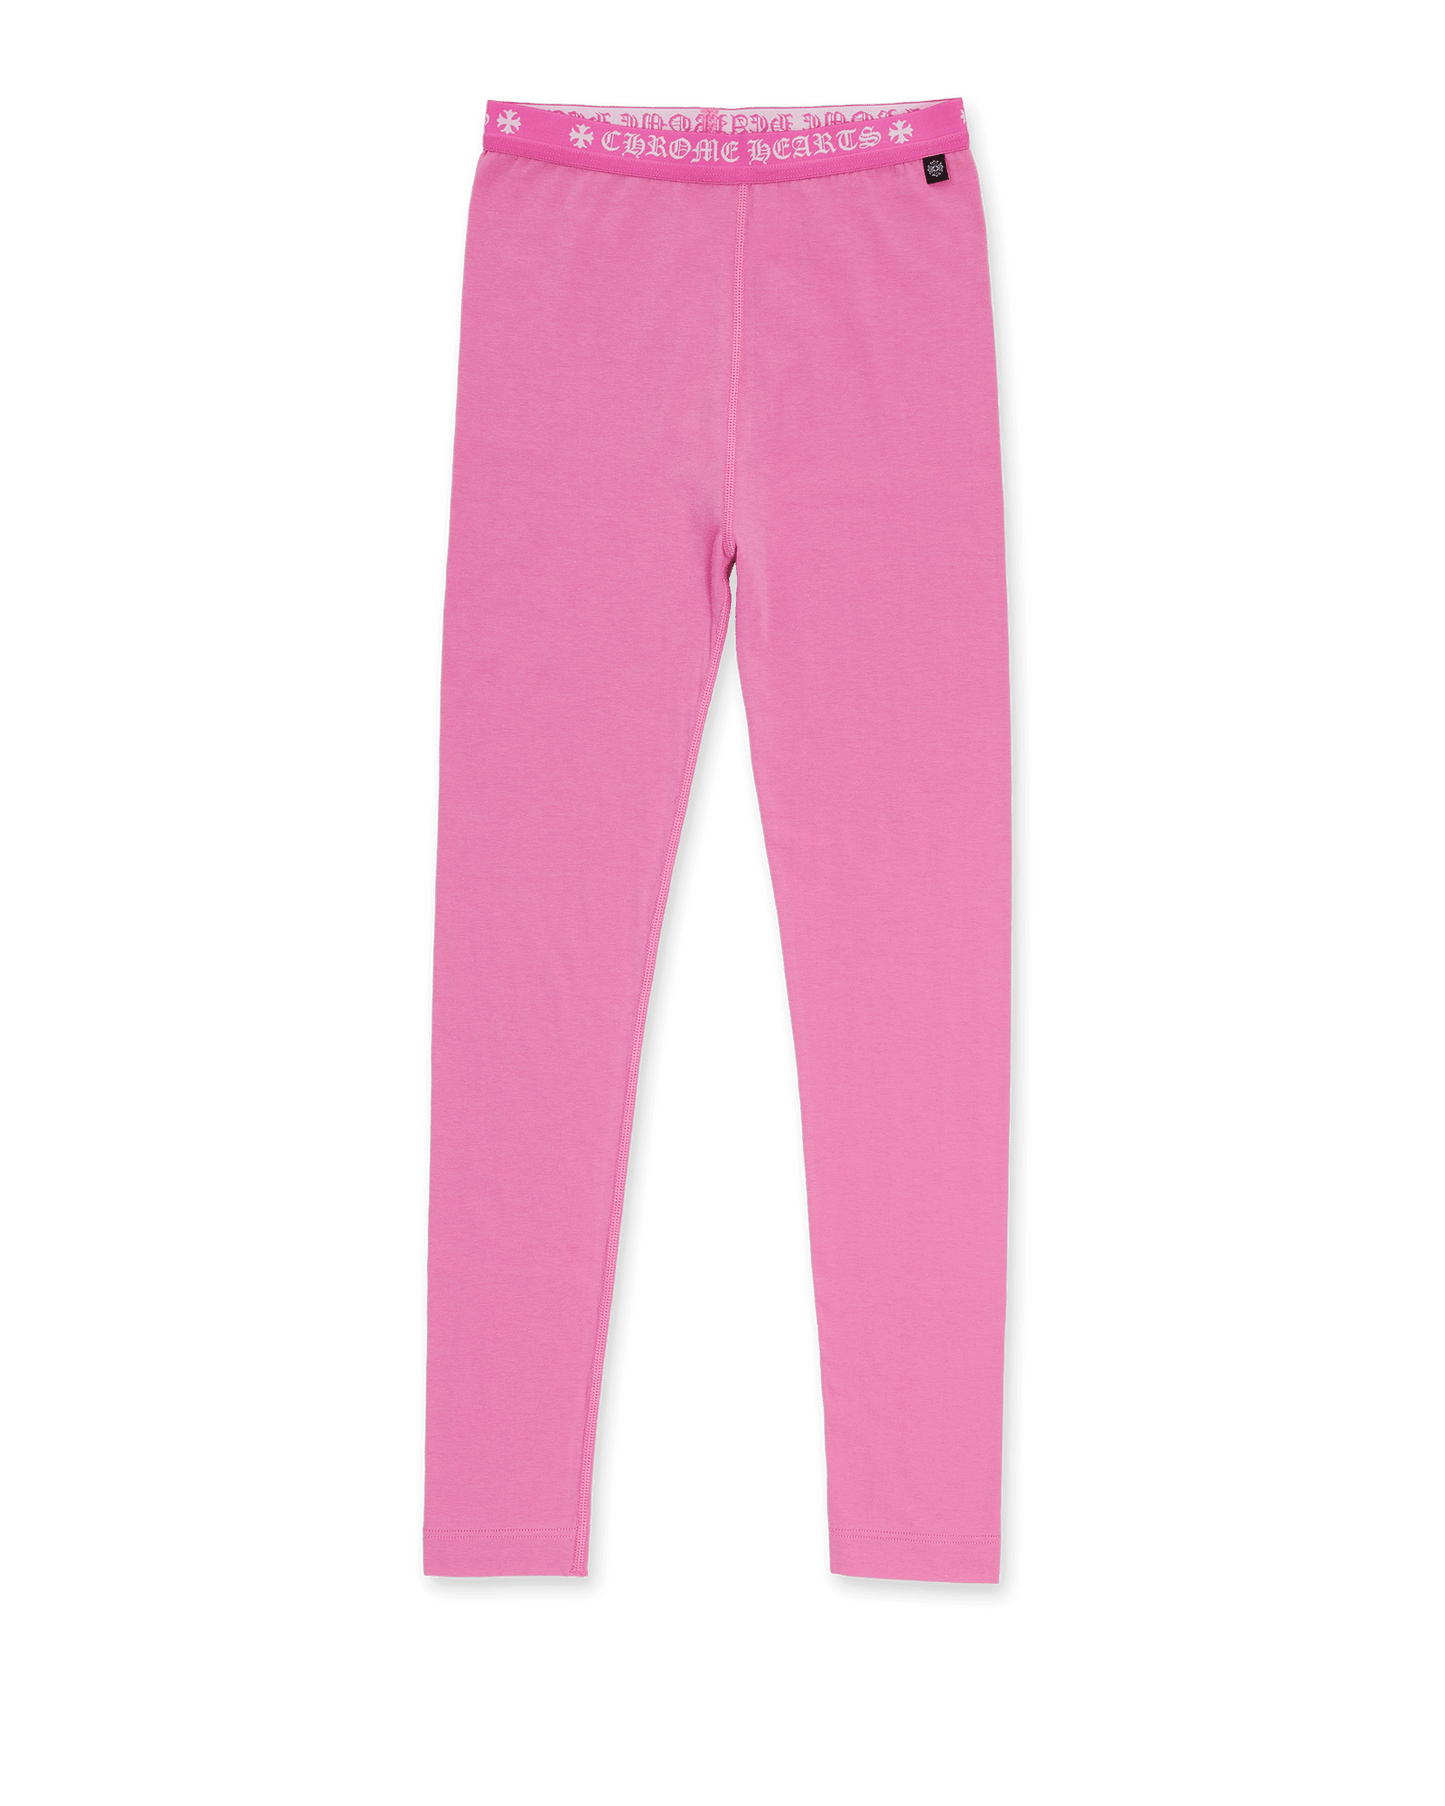 Chrome Hearts Cotton Leggings Pink - Supra Sneakers